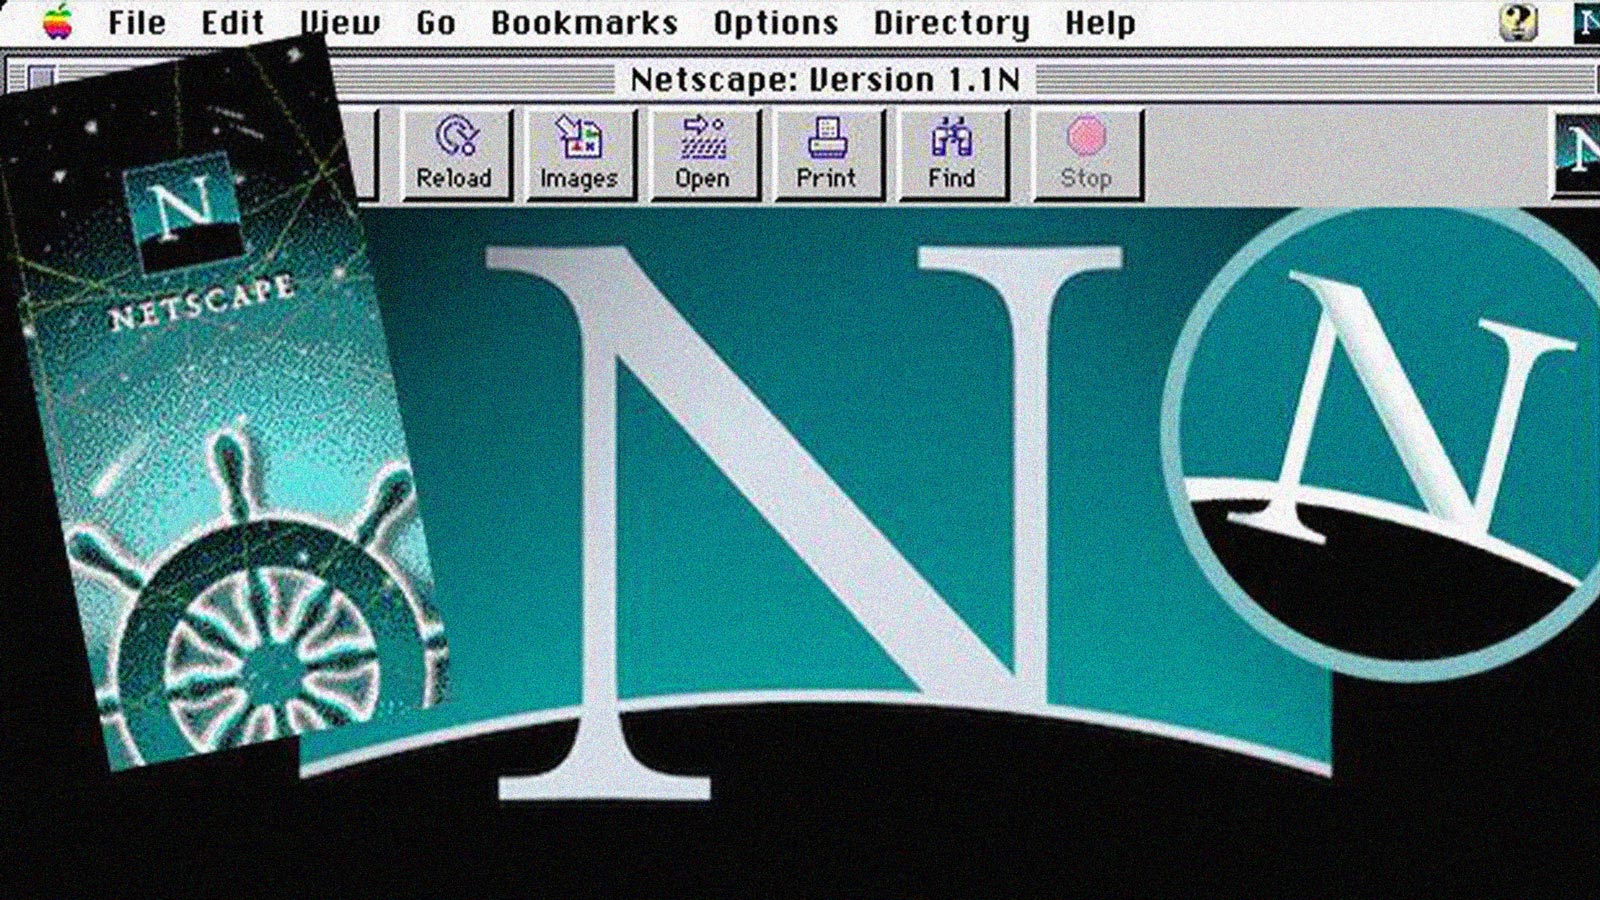 netscape browser